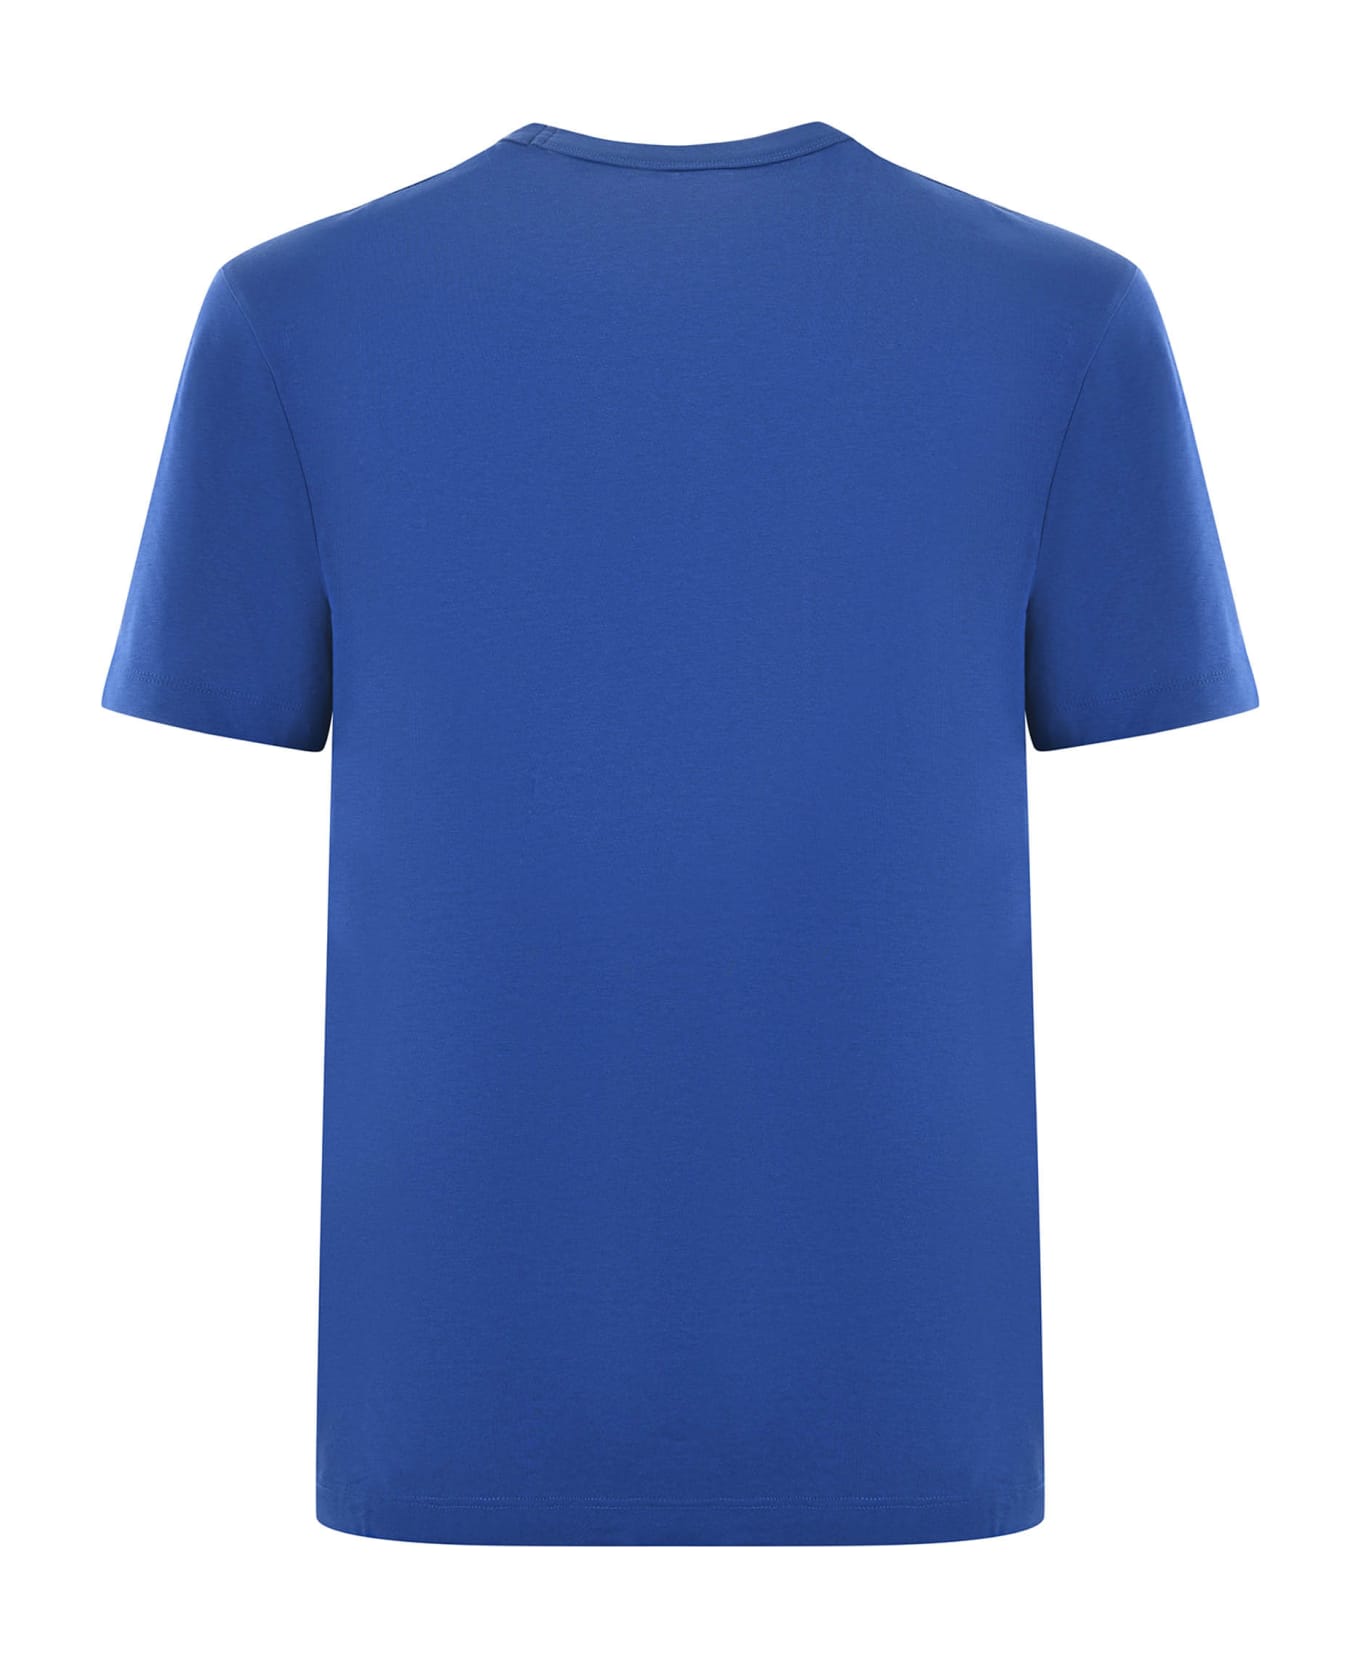 Blauer T-shirt - Blu cobalto